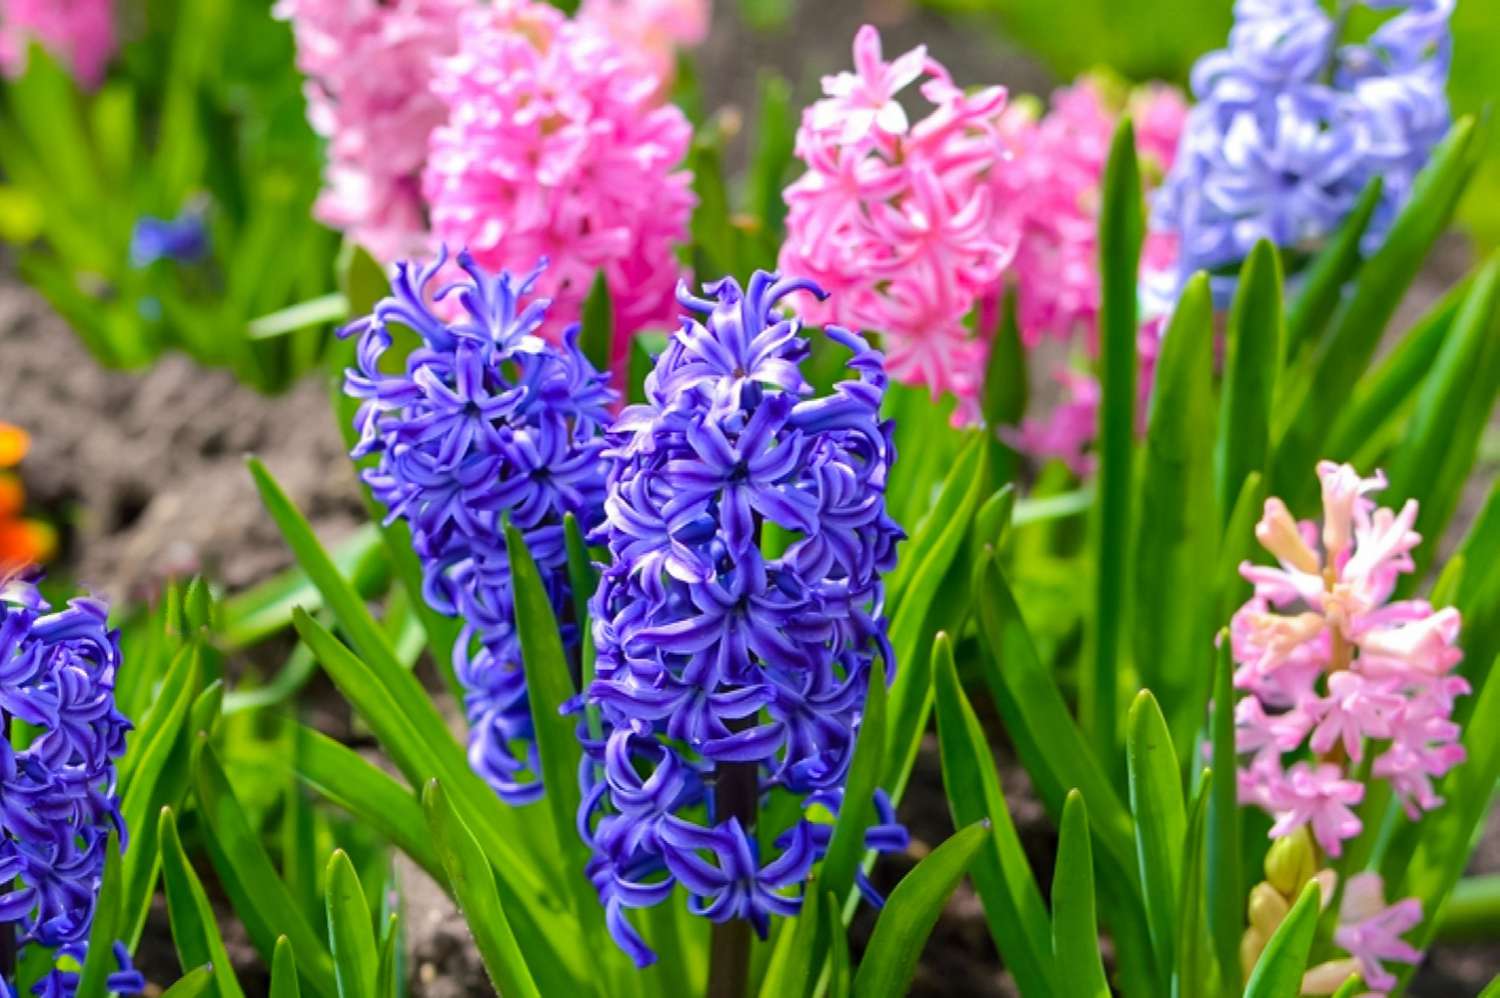 pink and purple hyacinth flowers